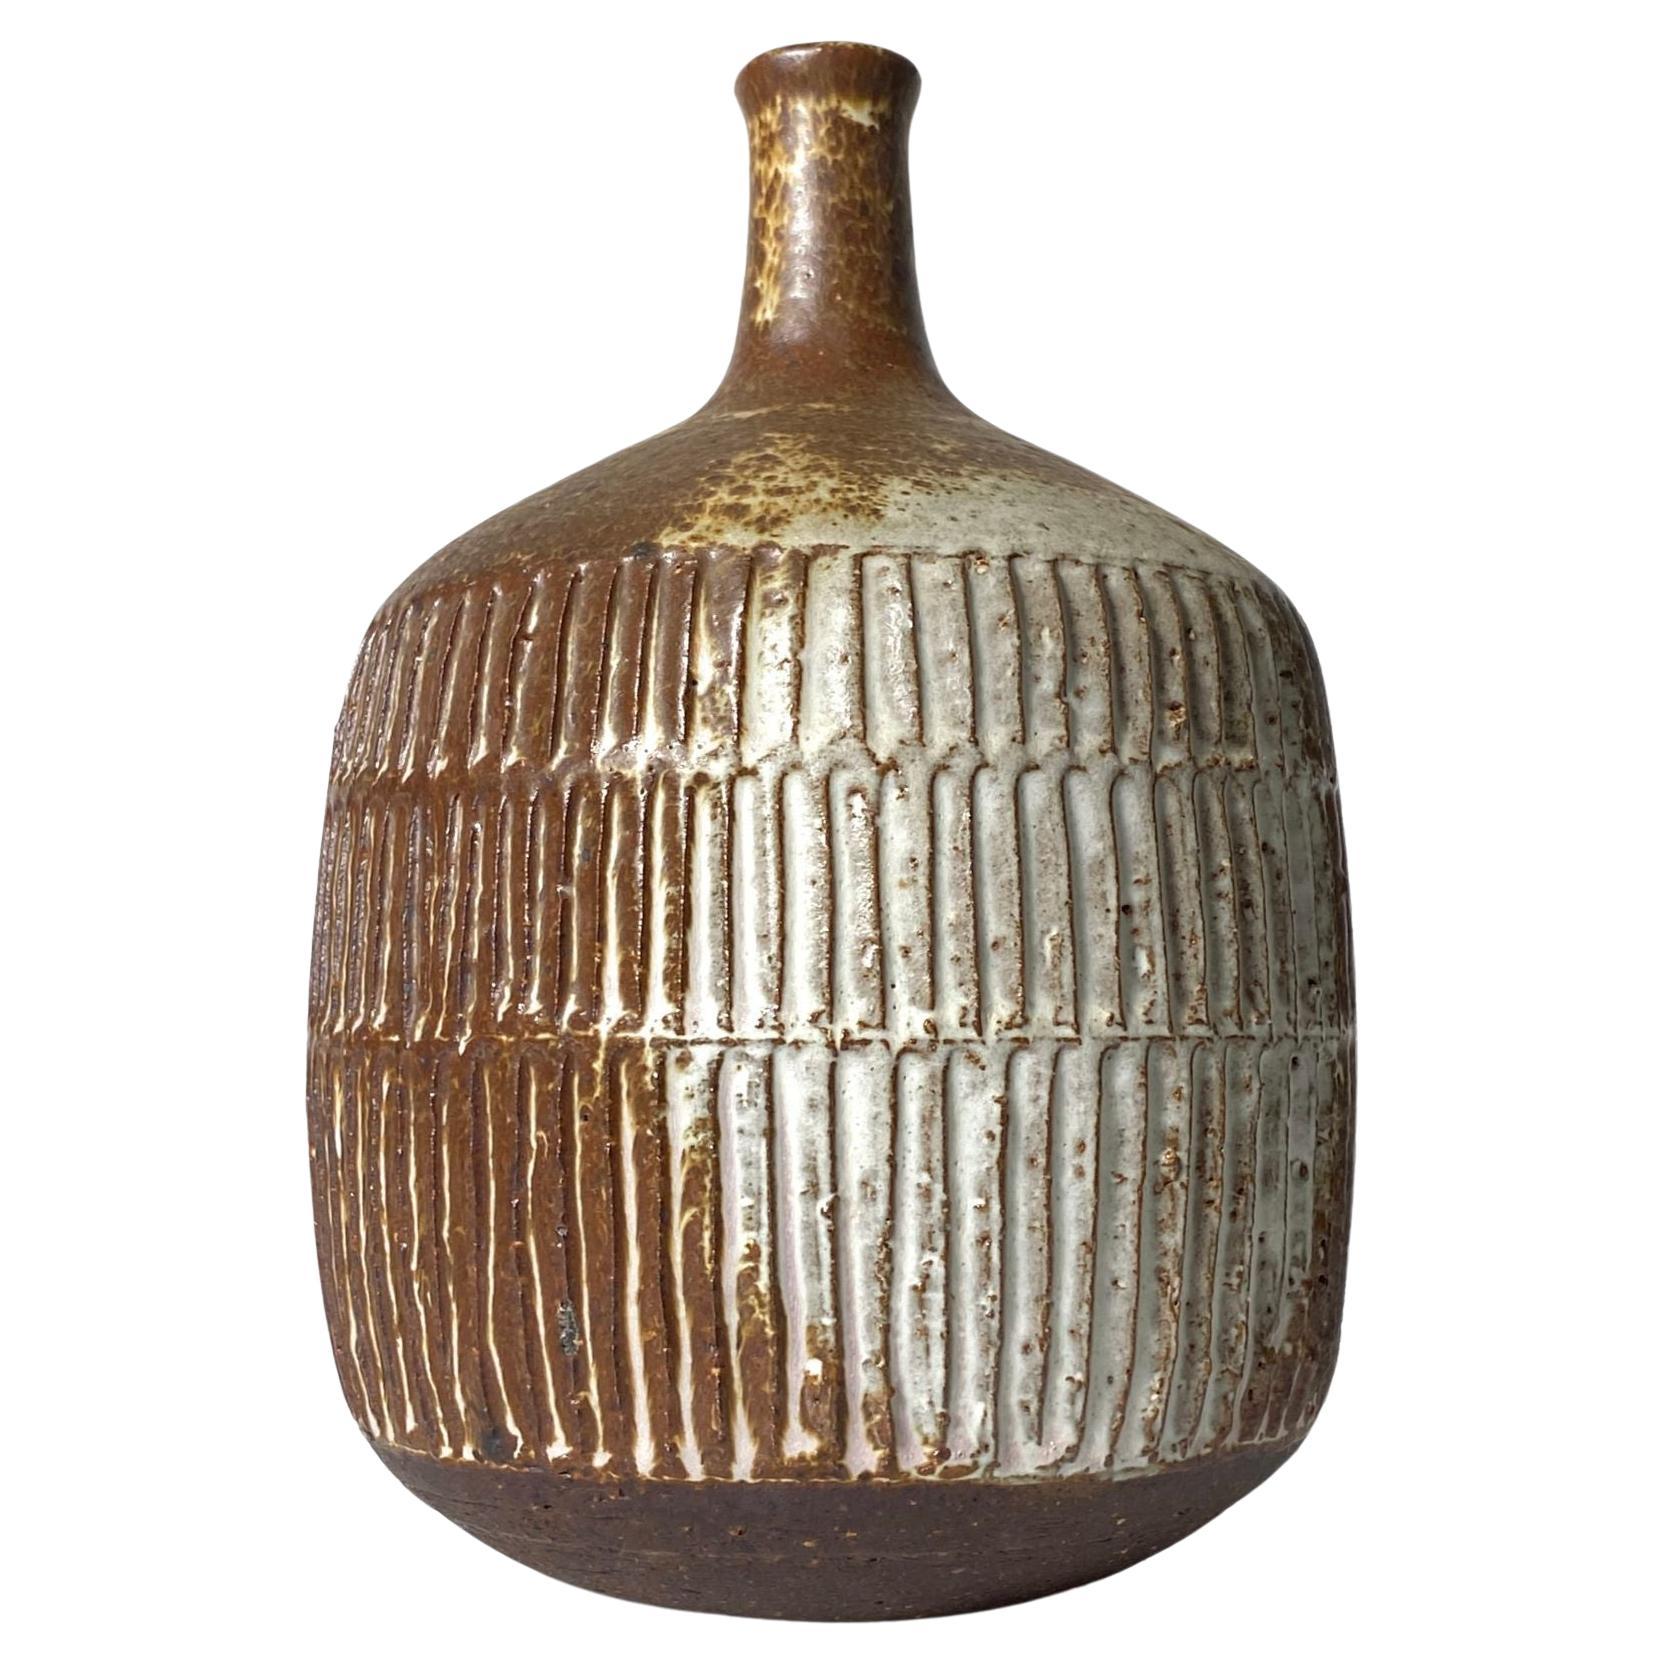 Signed Studio Pottery Vase in Stoneware by Paul Bellardo circa 1970s